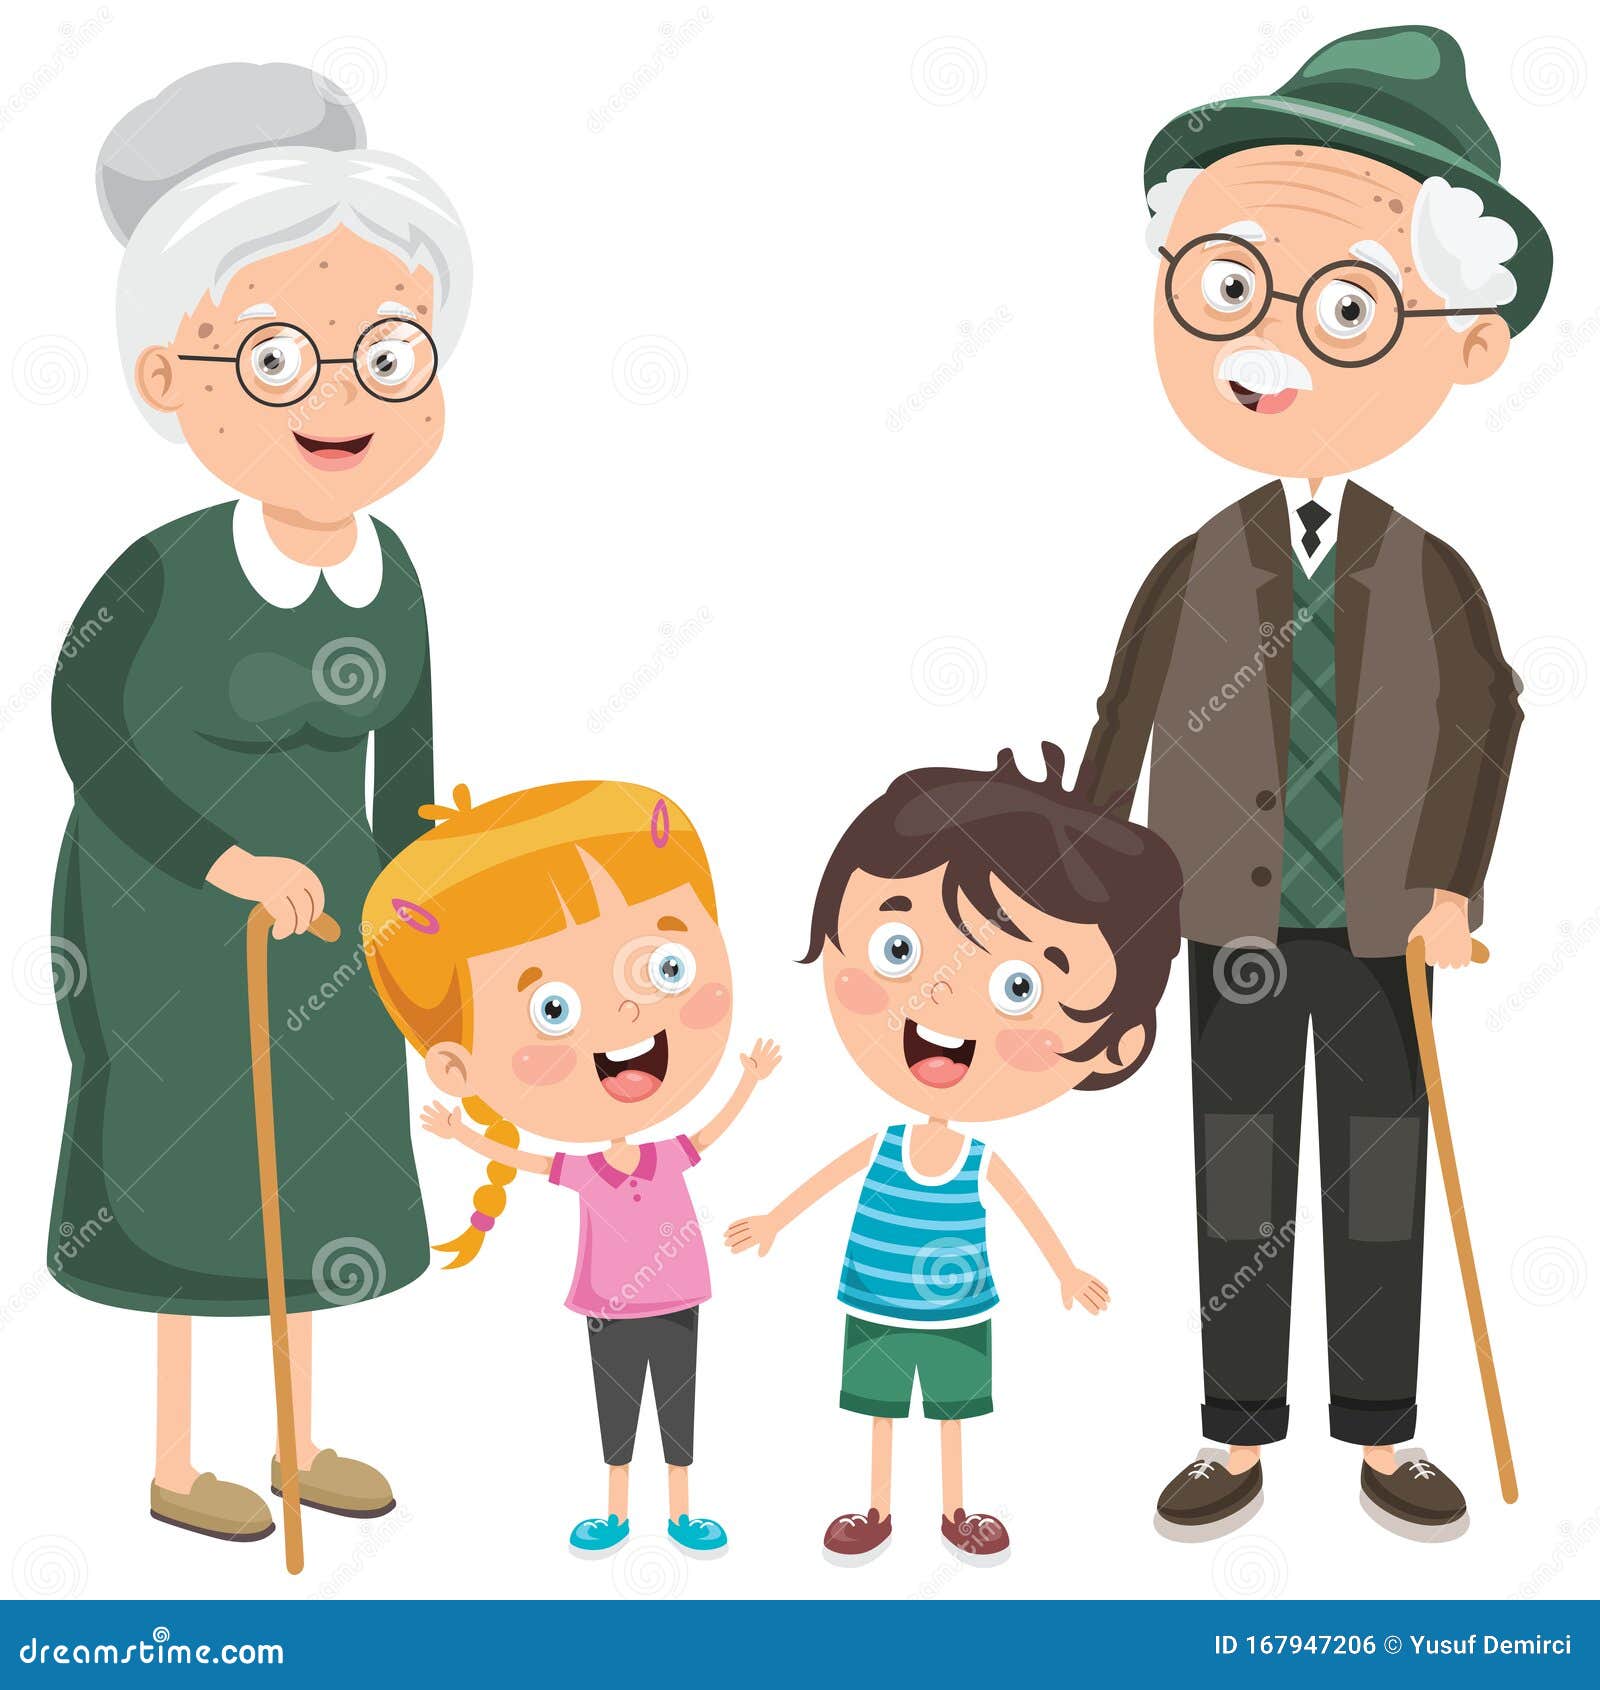 grandparents with grandchildren clipart